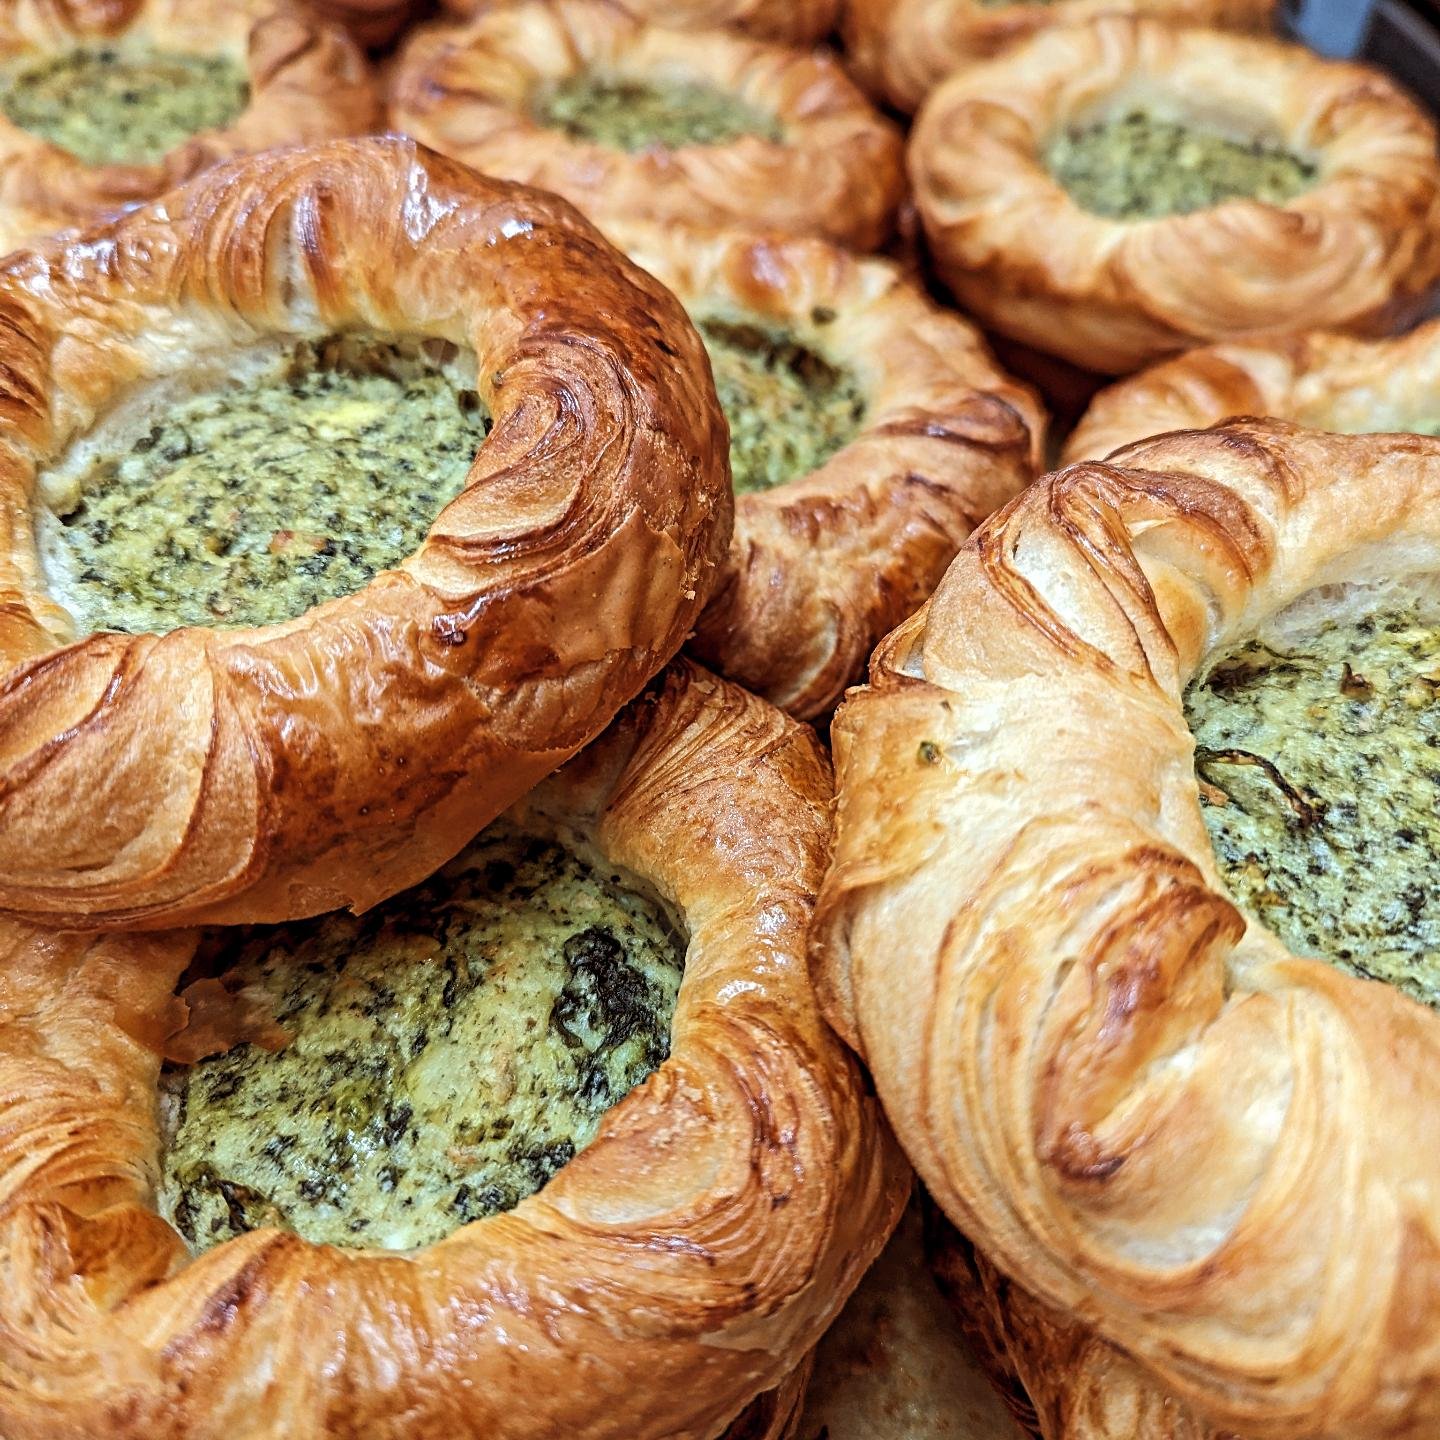 Spinach Pesto Danish
.
.
.
.
.
#viennoiserie #treatyoself #bakery #baker #pastry #foodporn #yum #pastrychef #local #goodtimes #culvercity #losangeles #breakfast #yass #butter #pesto